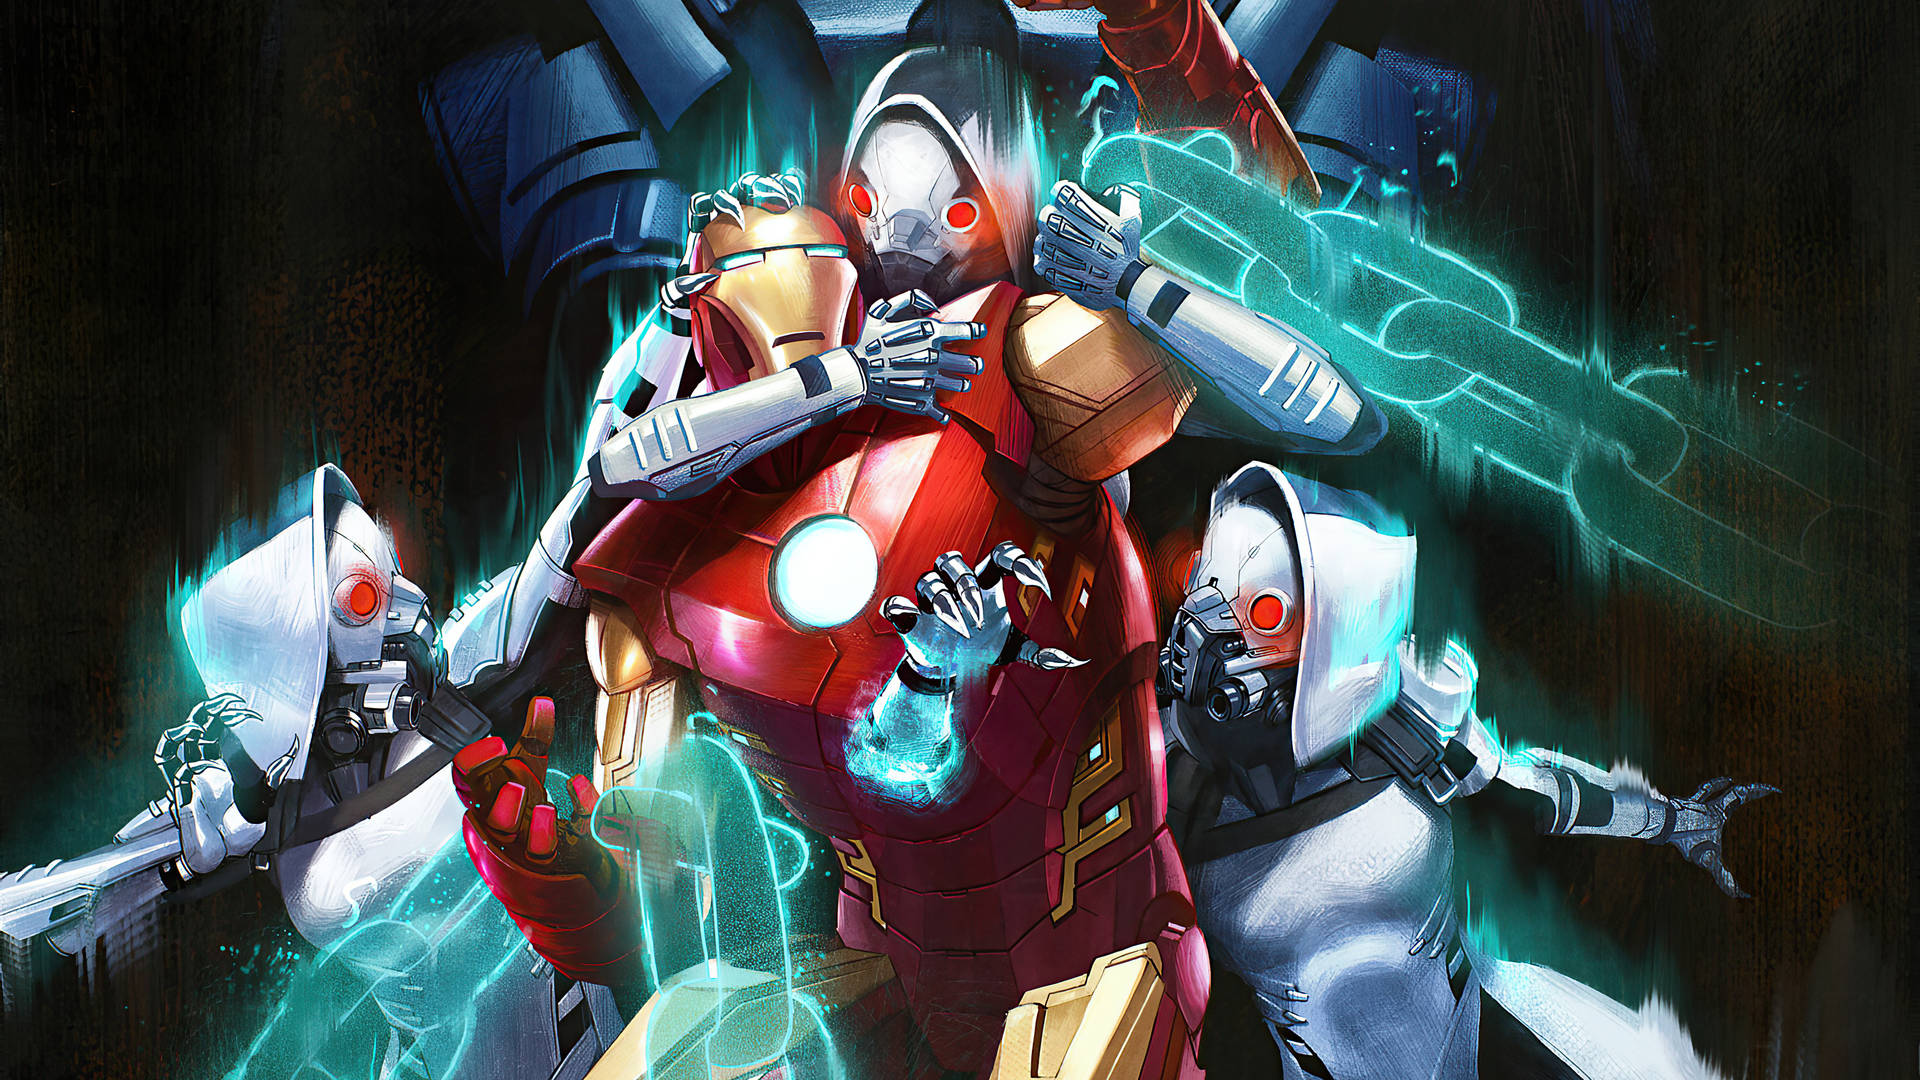 Cool Iron Man Vs Ghost Artwork Wallpaper